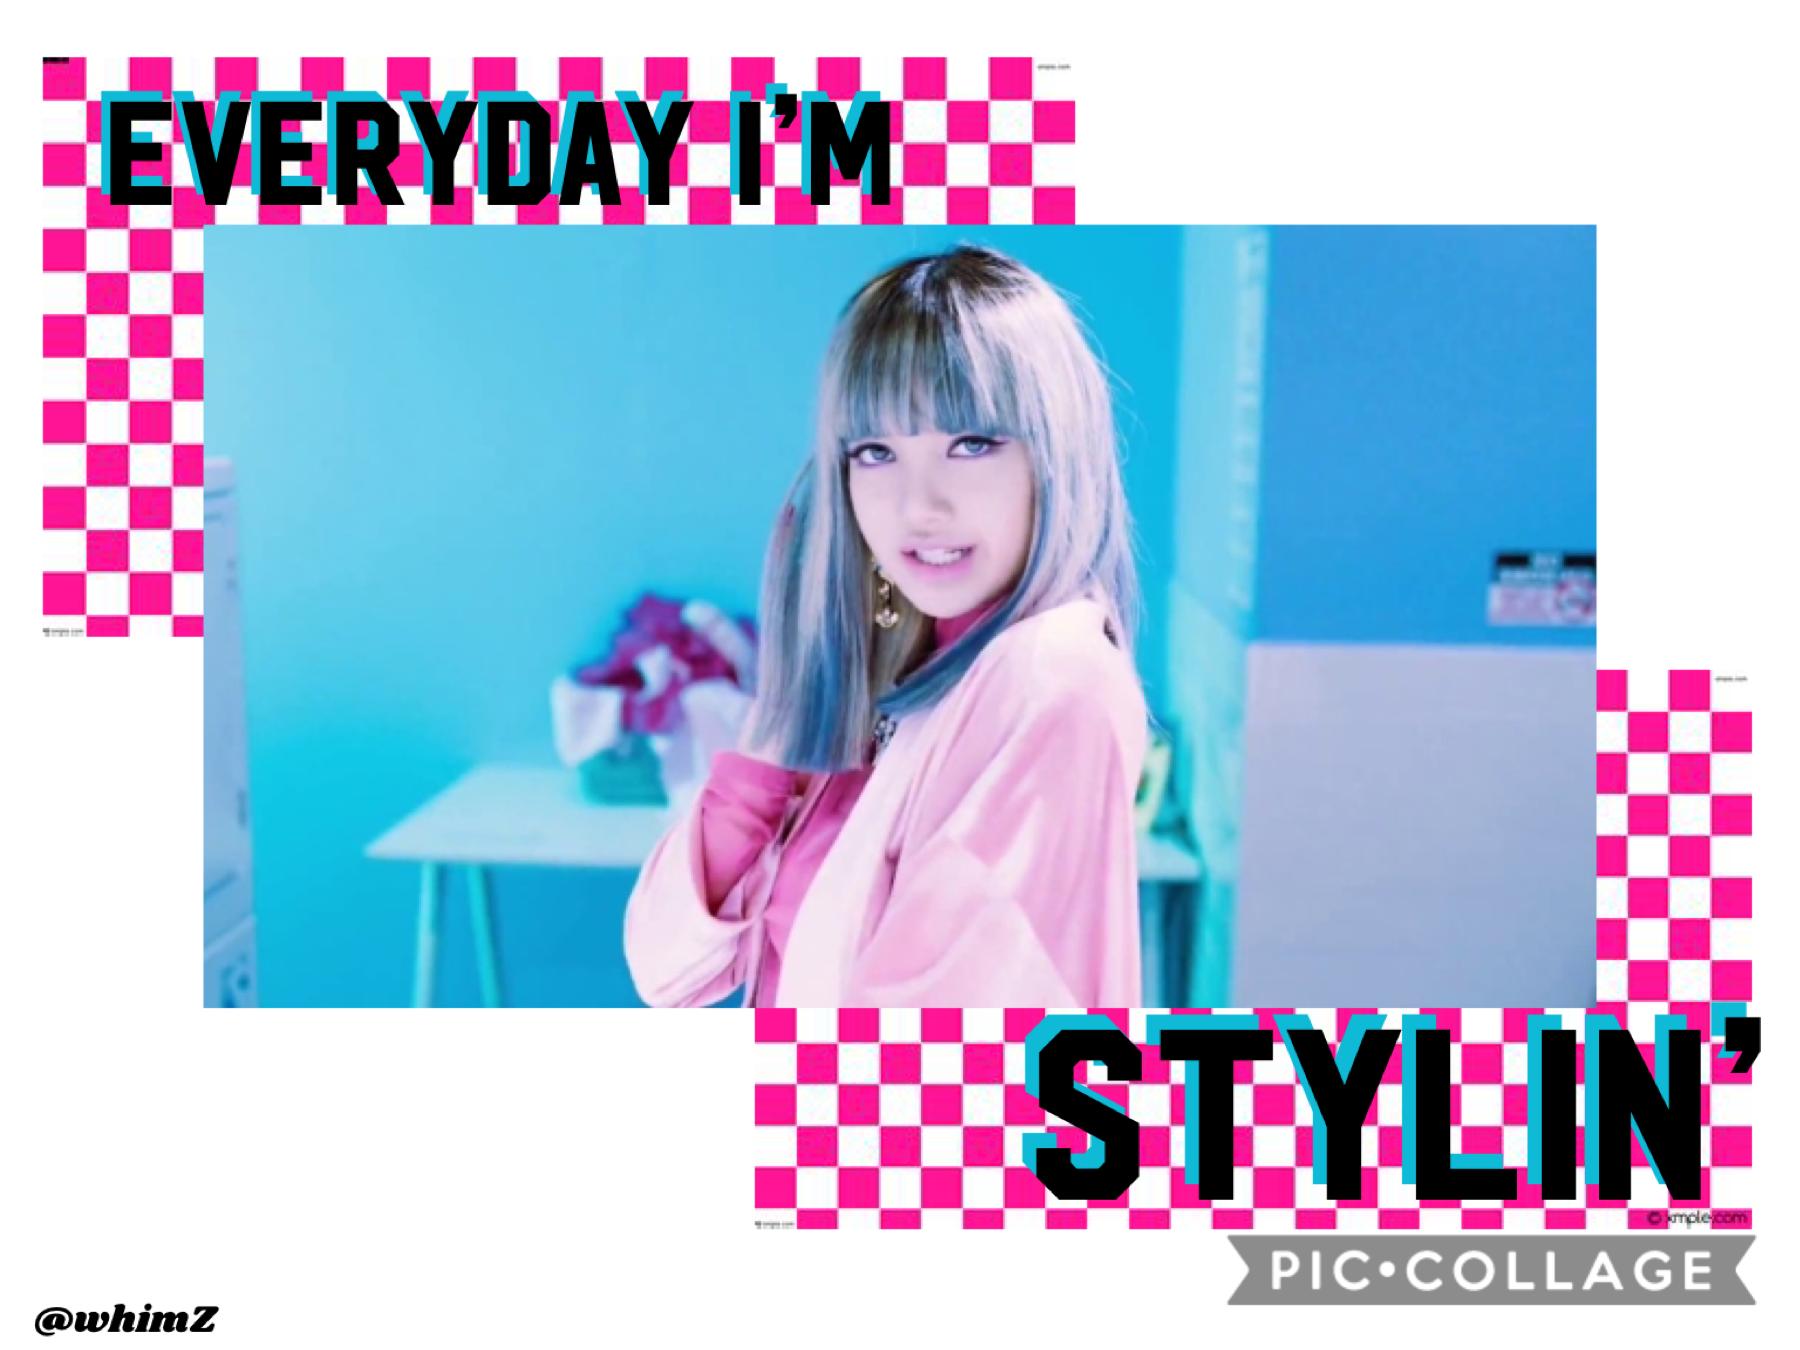 EvErYdAy I’m StYlIn’
Lisa whistle edit